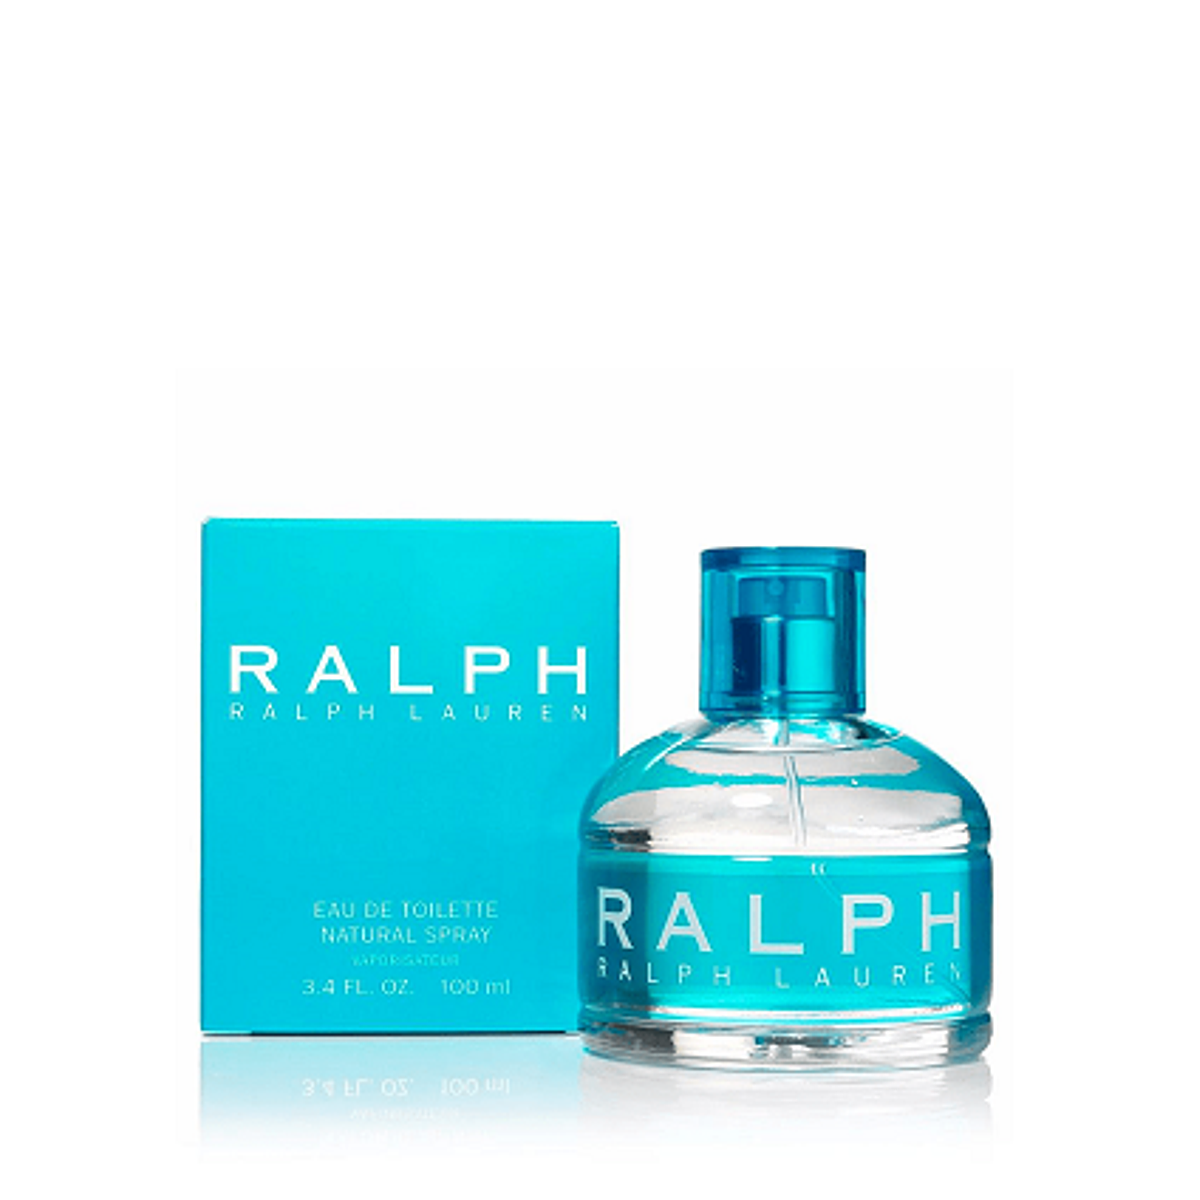 perfume ralph